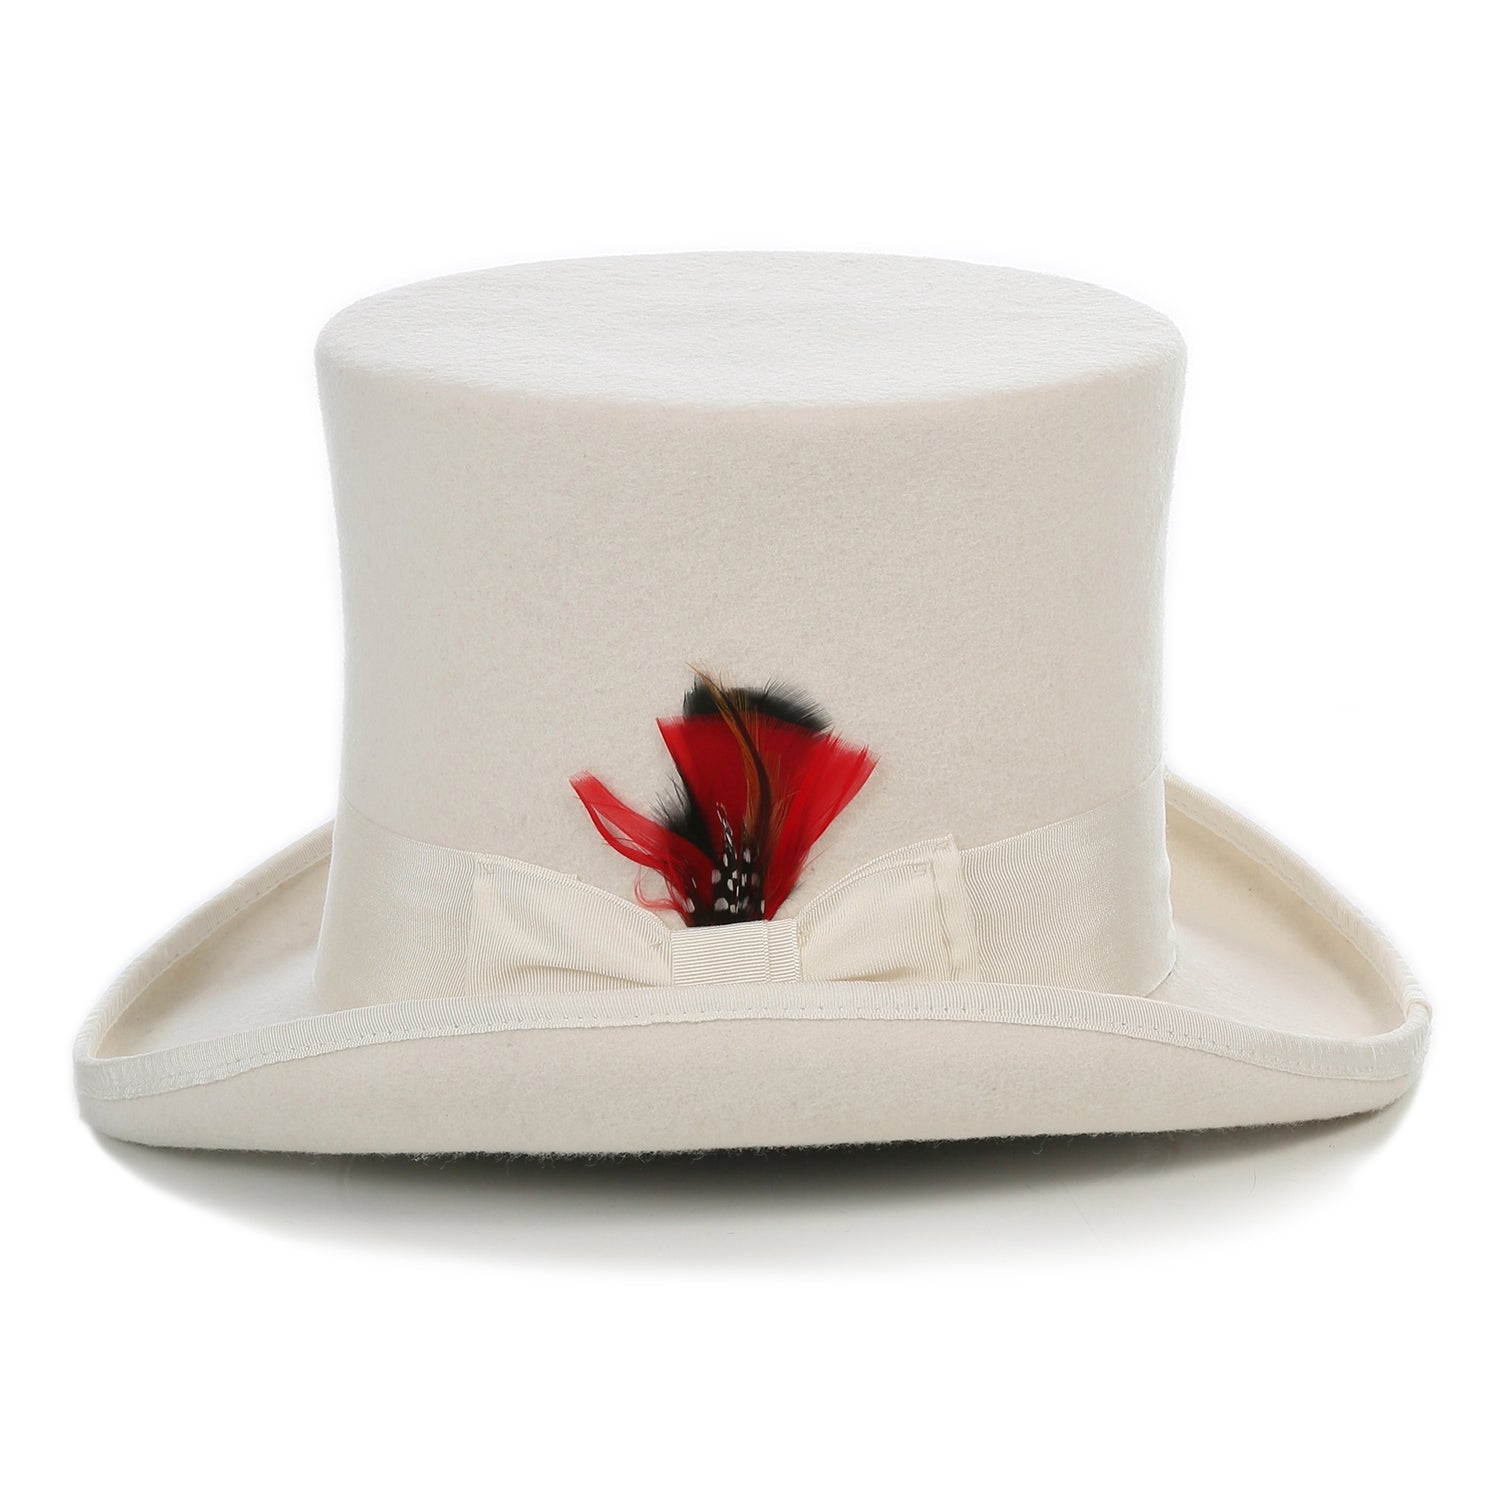 Men's Off White Top Hat | Mad Hatter Hat | Steampunk Hat | FERRECCI ...